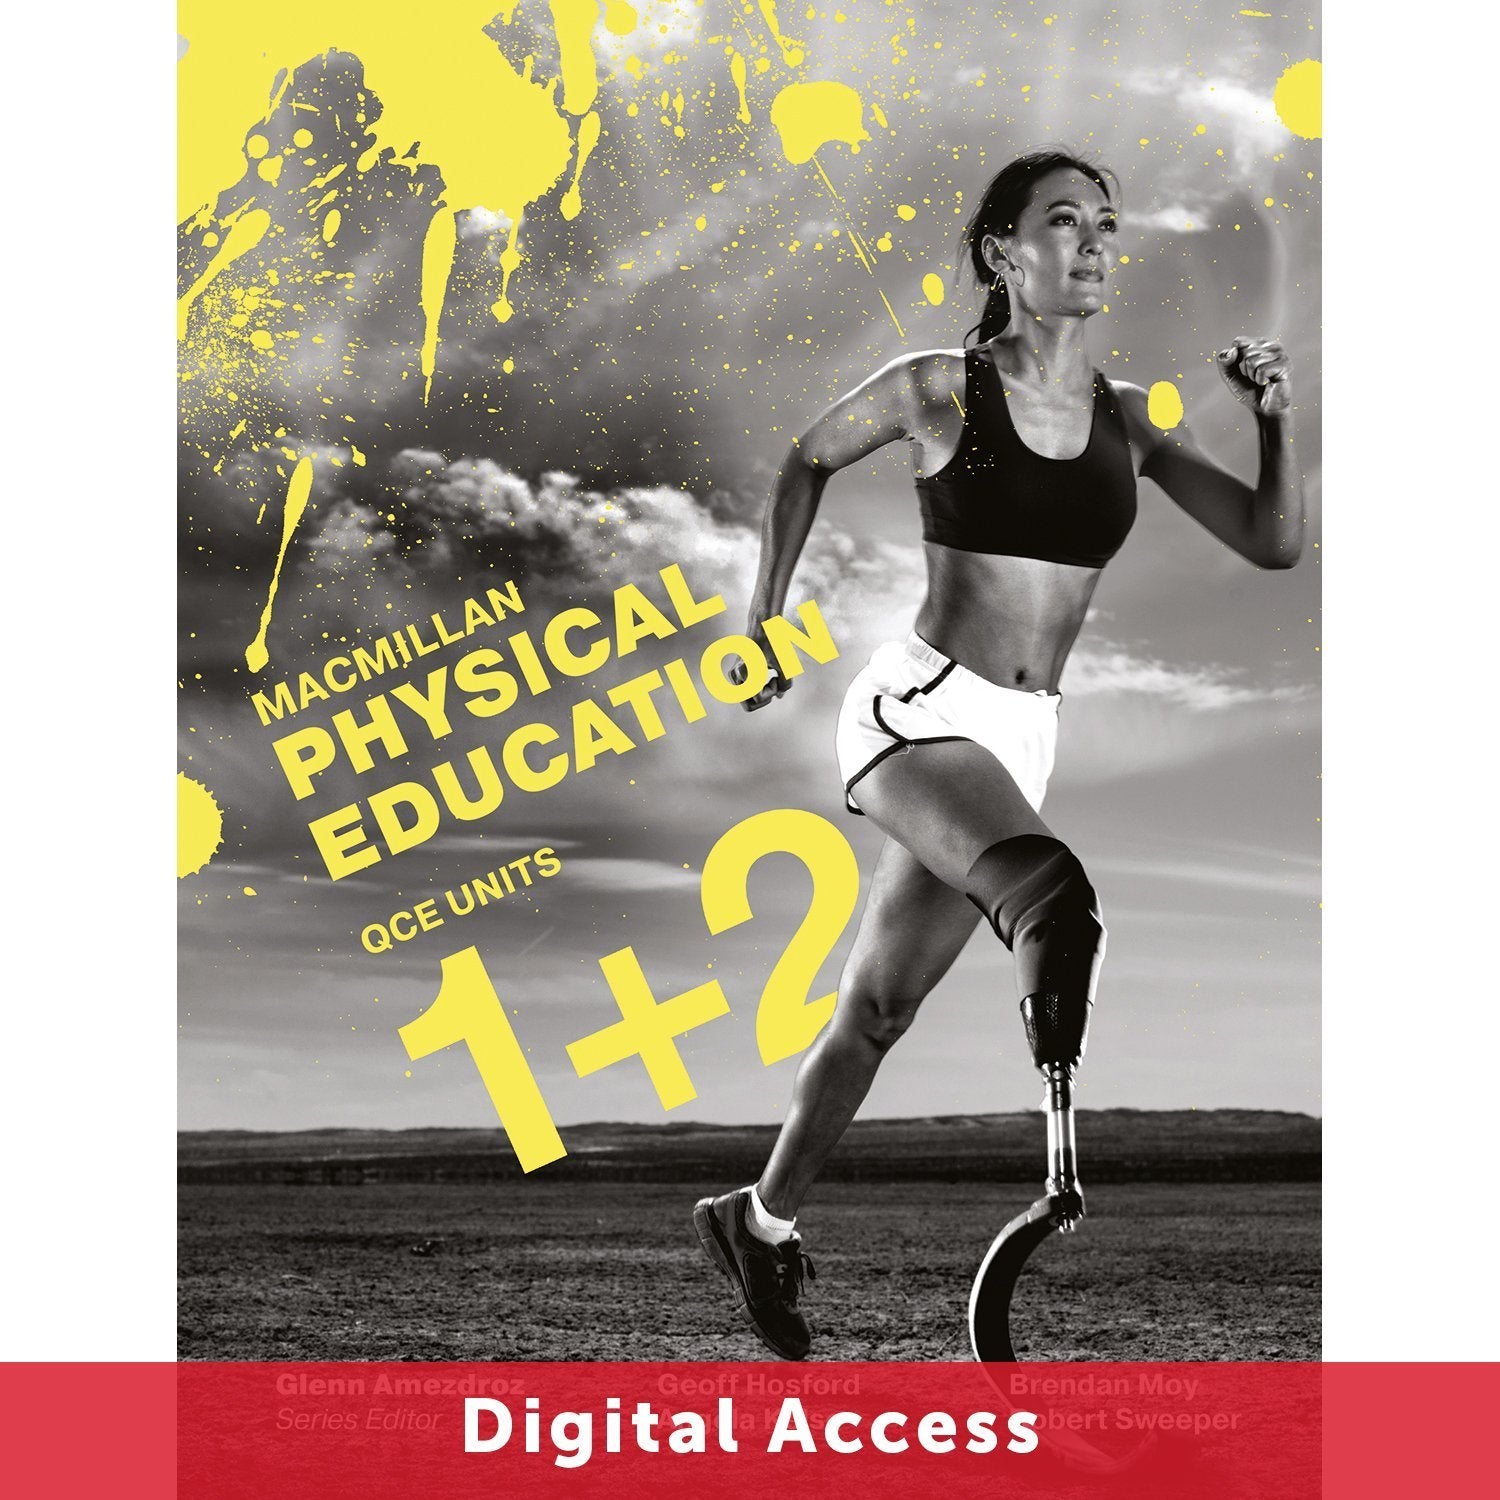 Macmillan Physical Education QCE Units 1&2 Teacher Digital Access